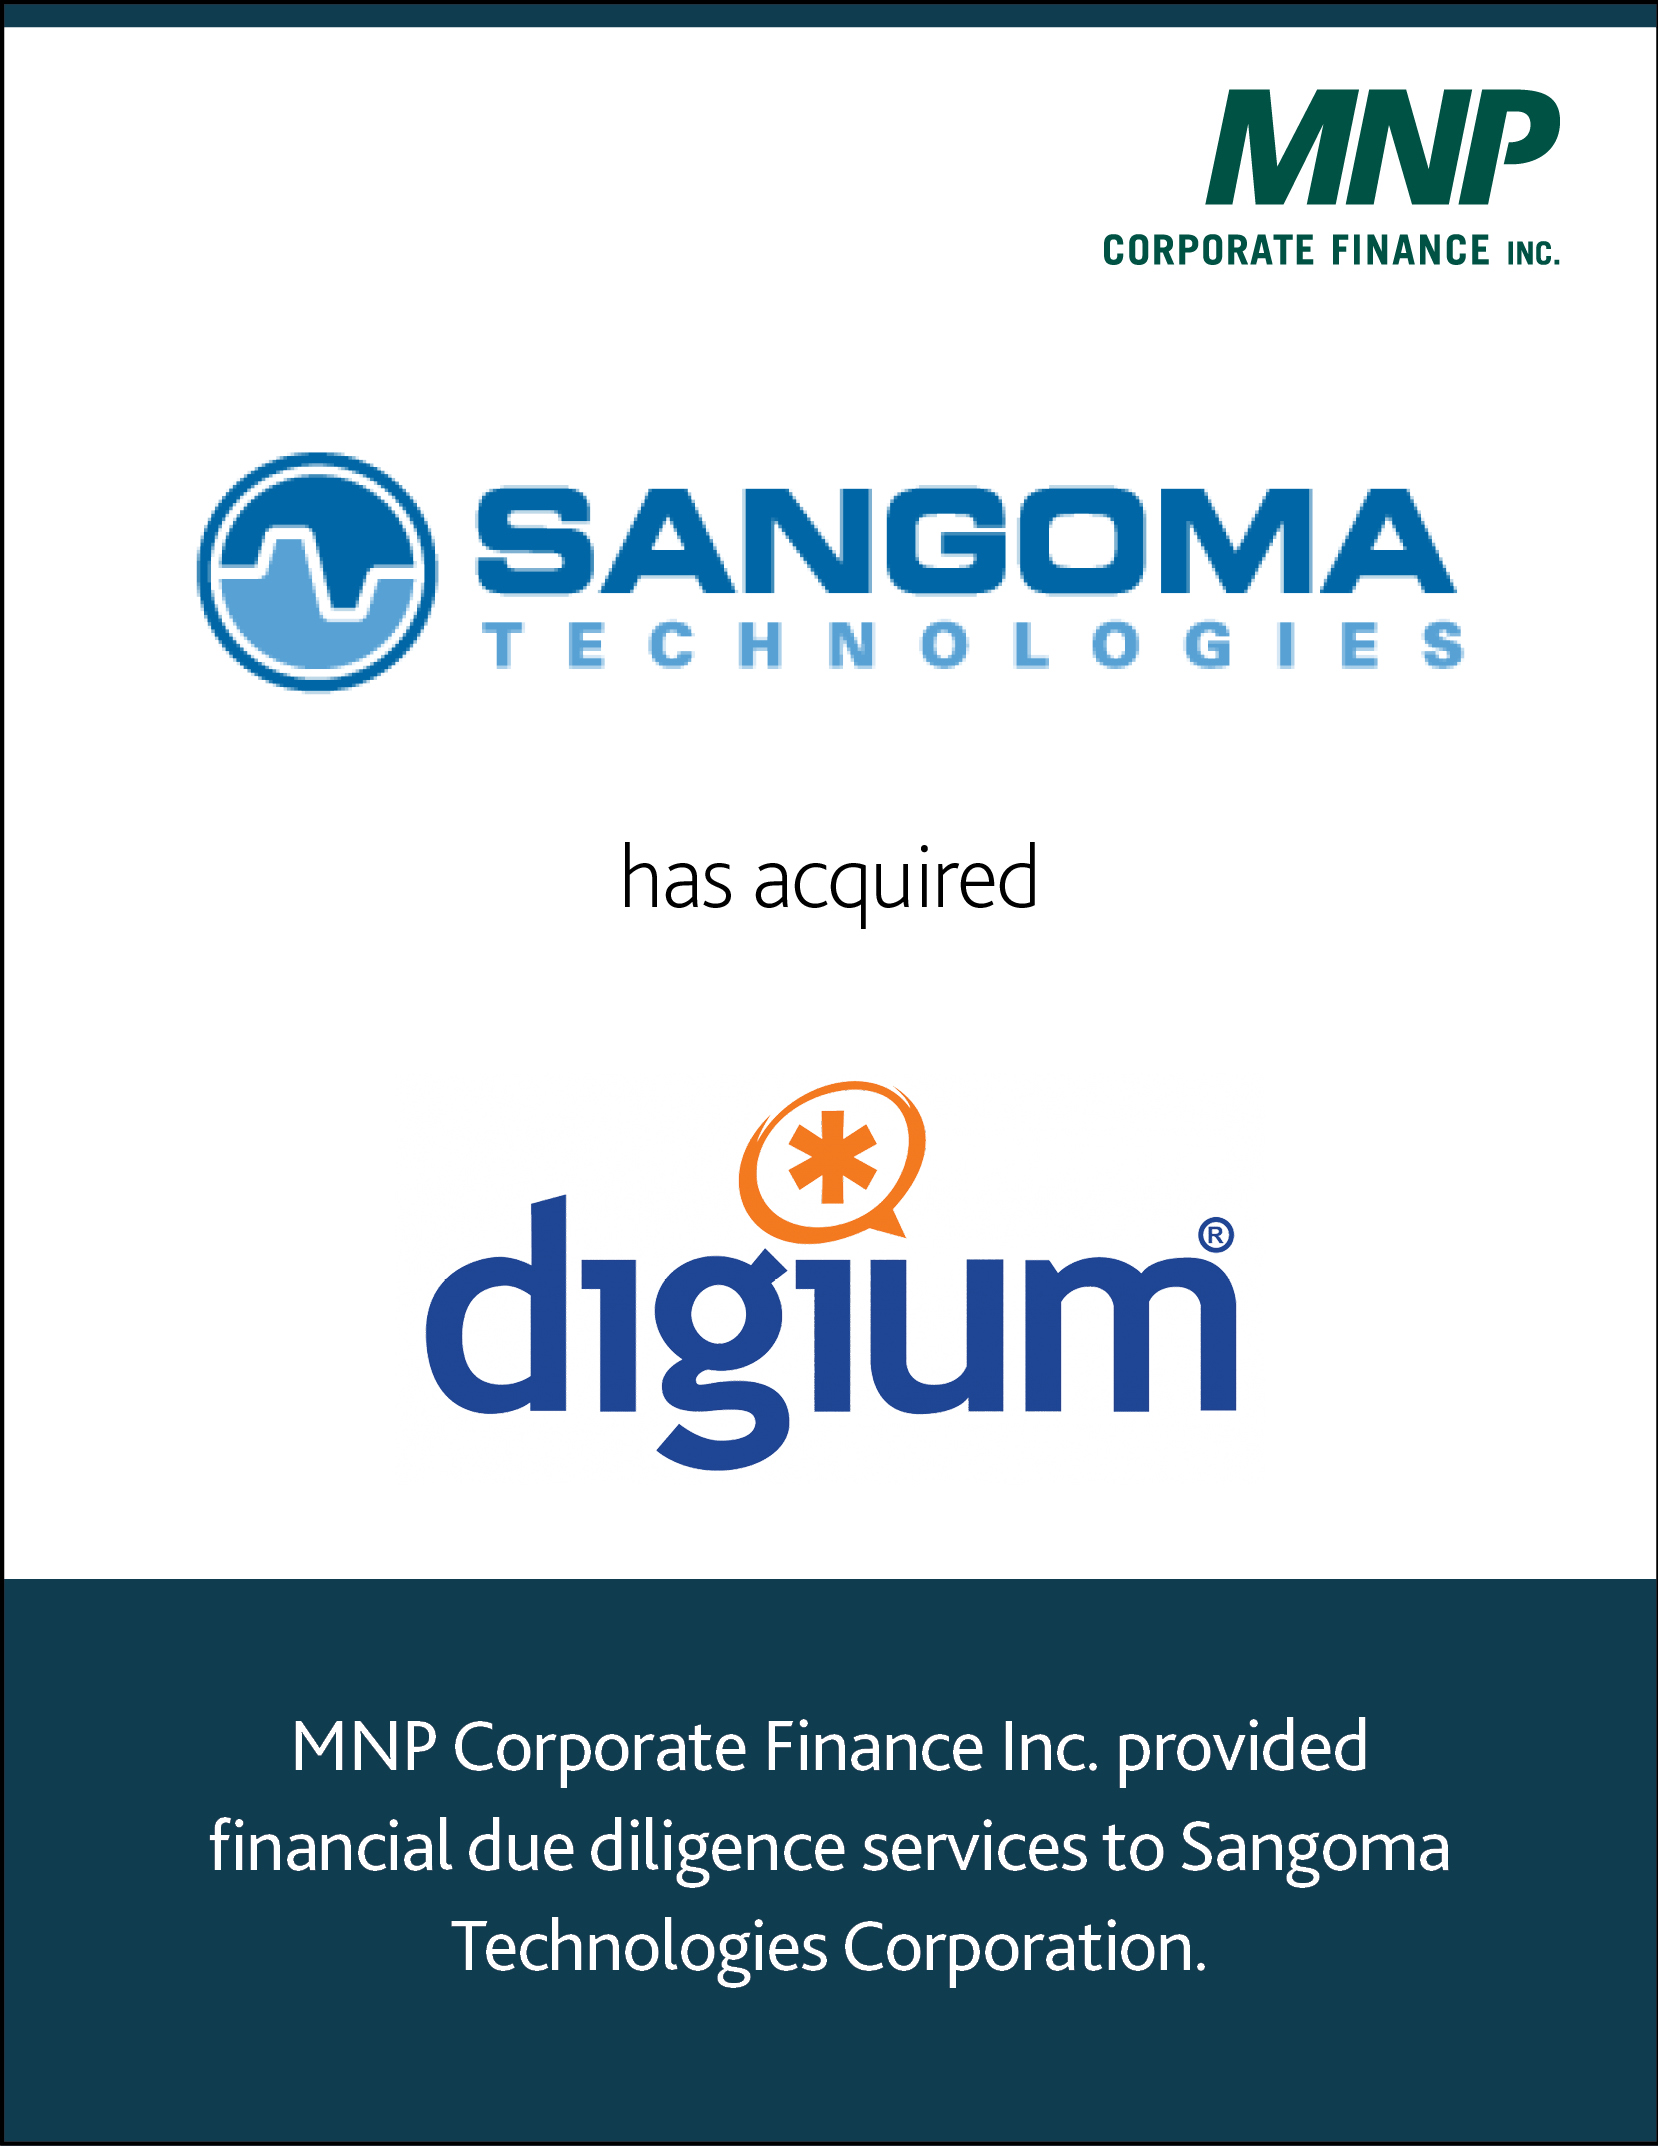 Sangoma Technologies Corporation has acquired Digium, Inc.